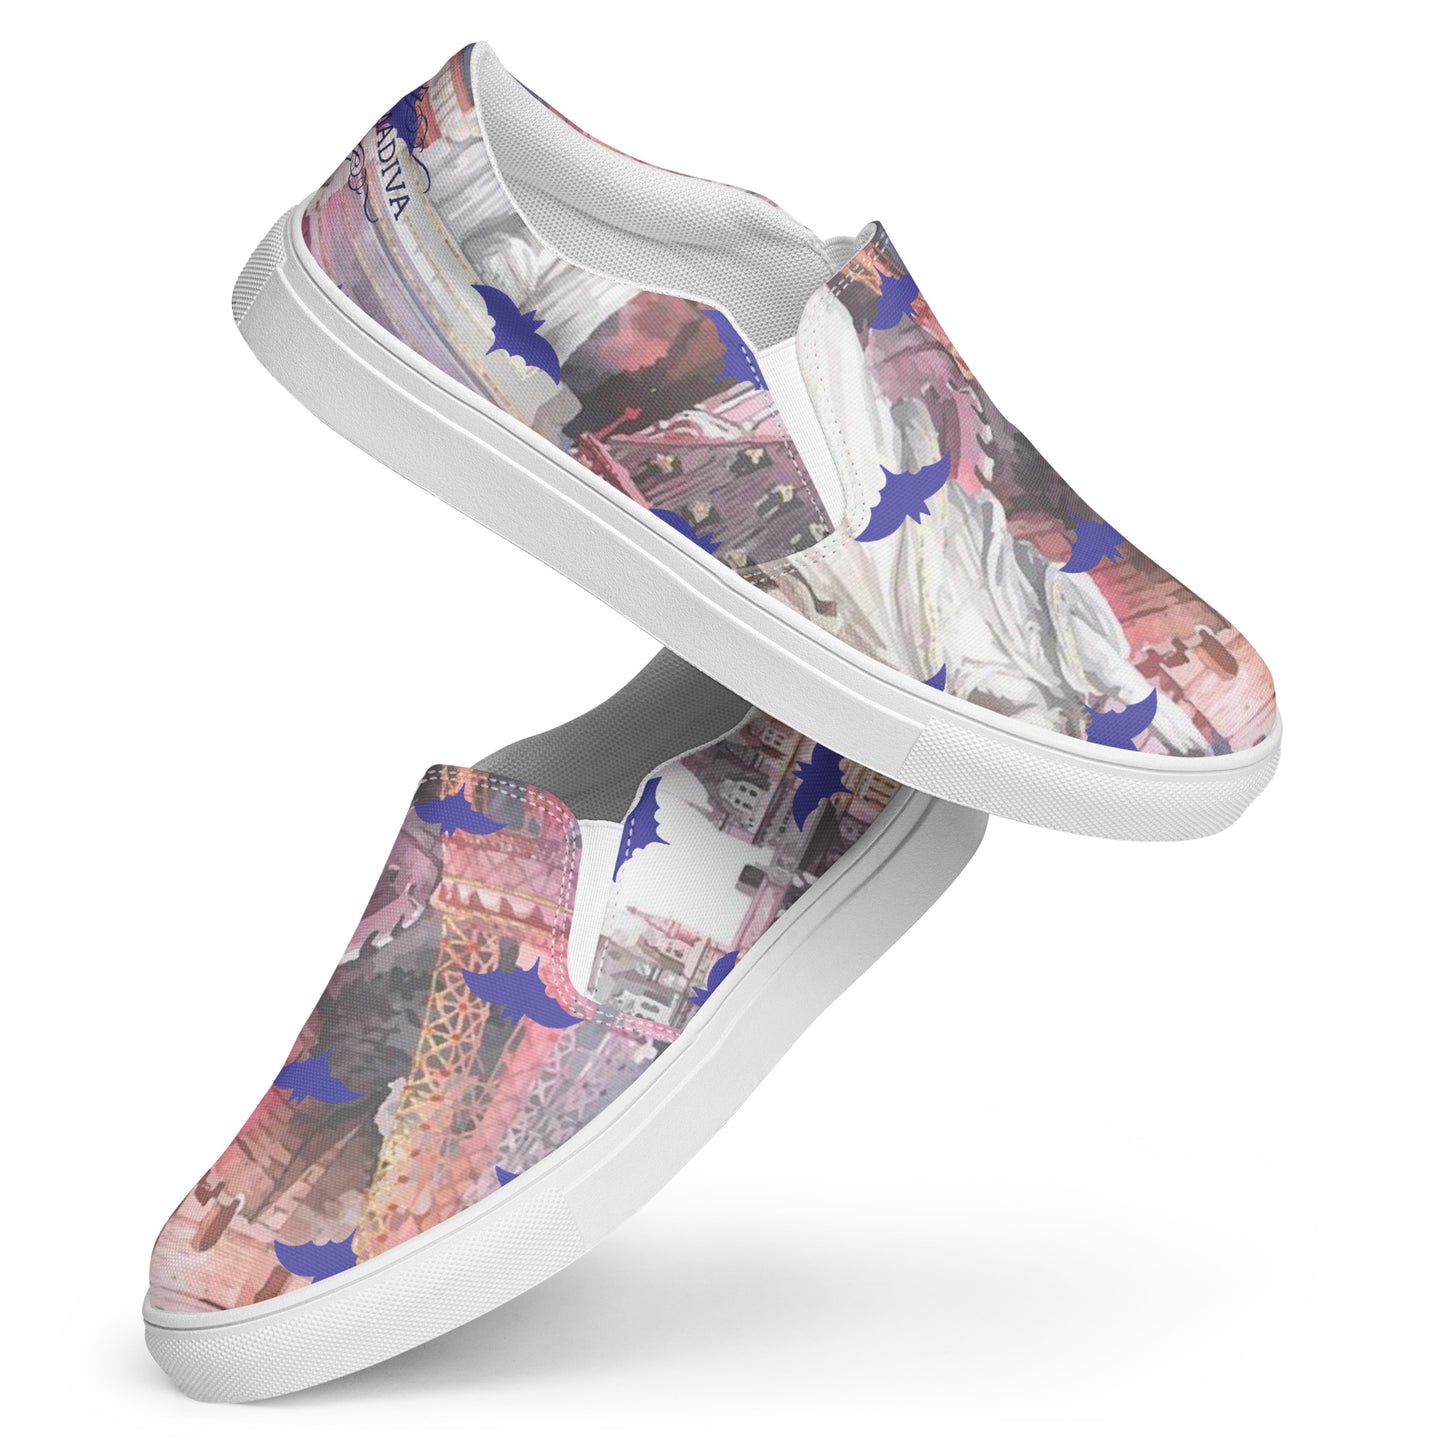 Men’s Silhouette slip-on canvas shoes